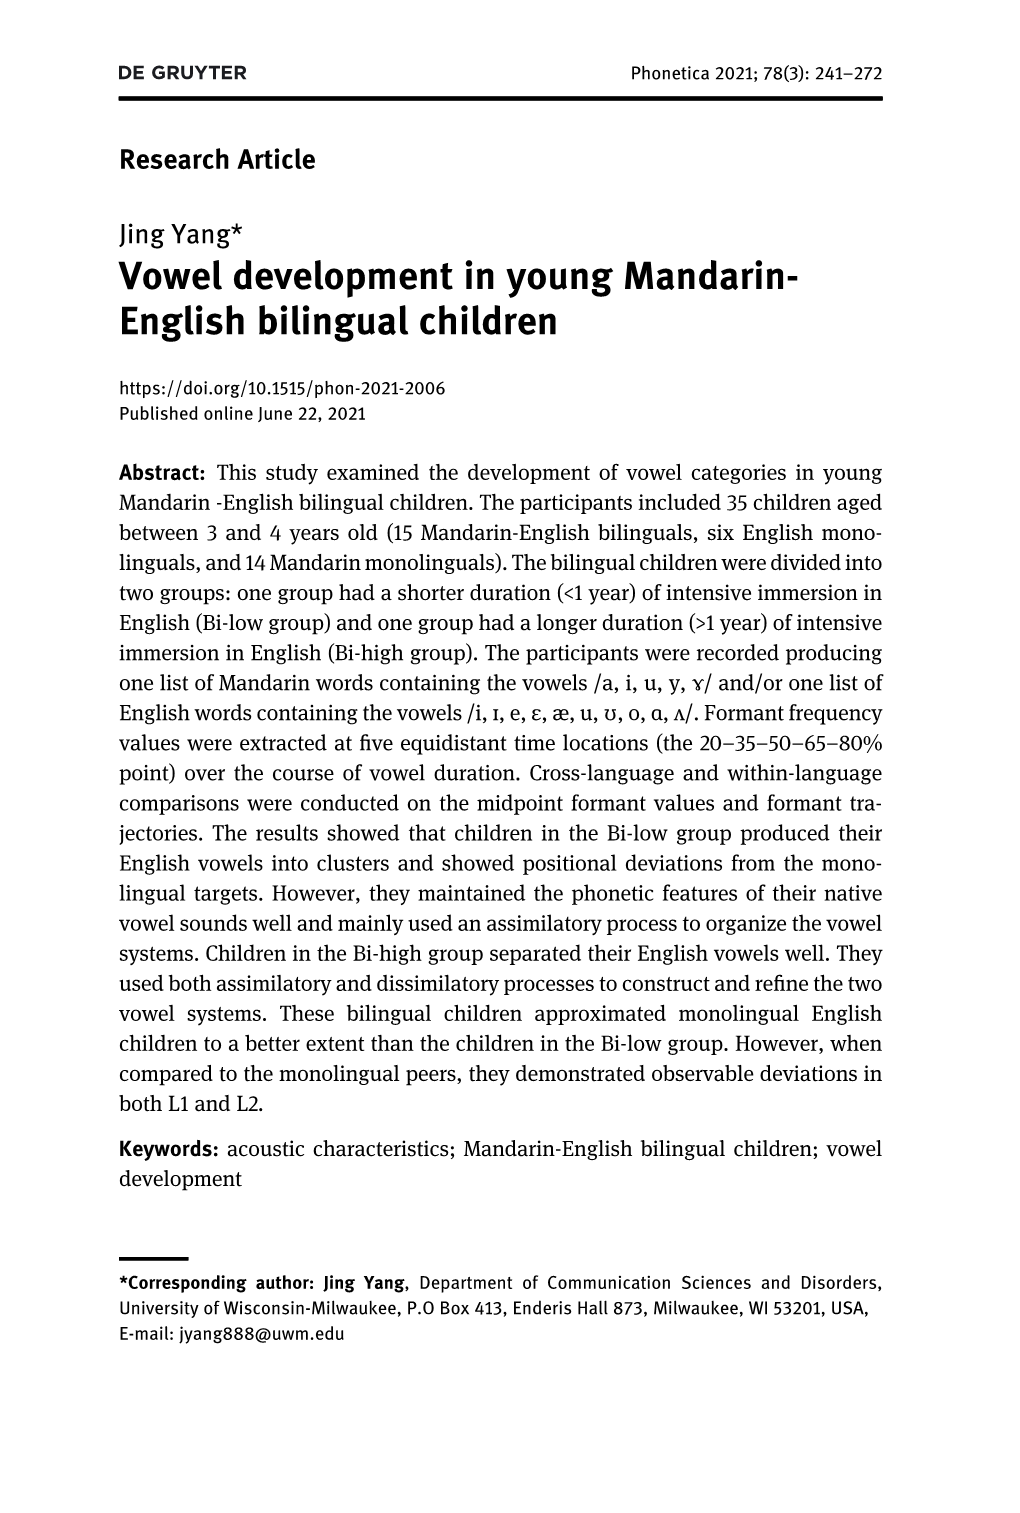 Vowel Development in Young Mandarin- English Bilingual Children Published Online June 22, 2021